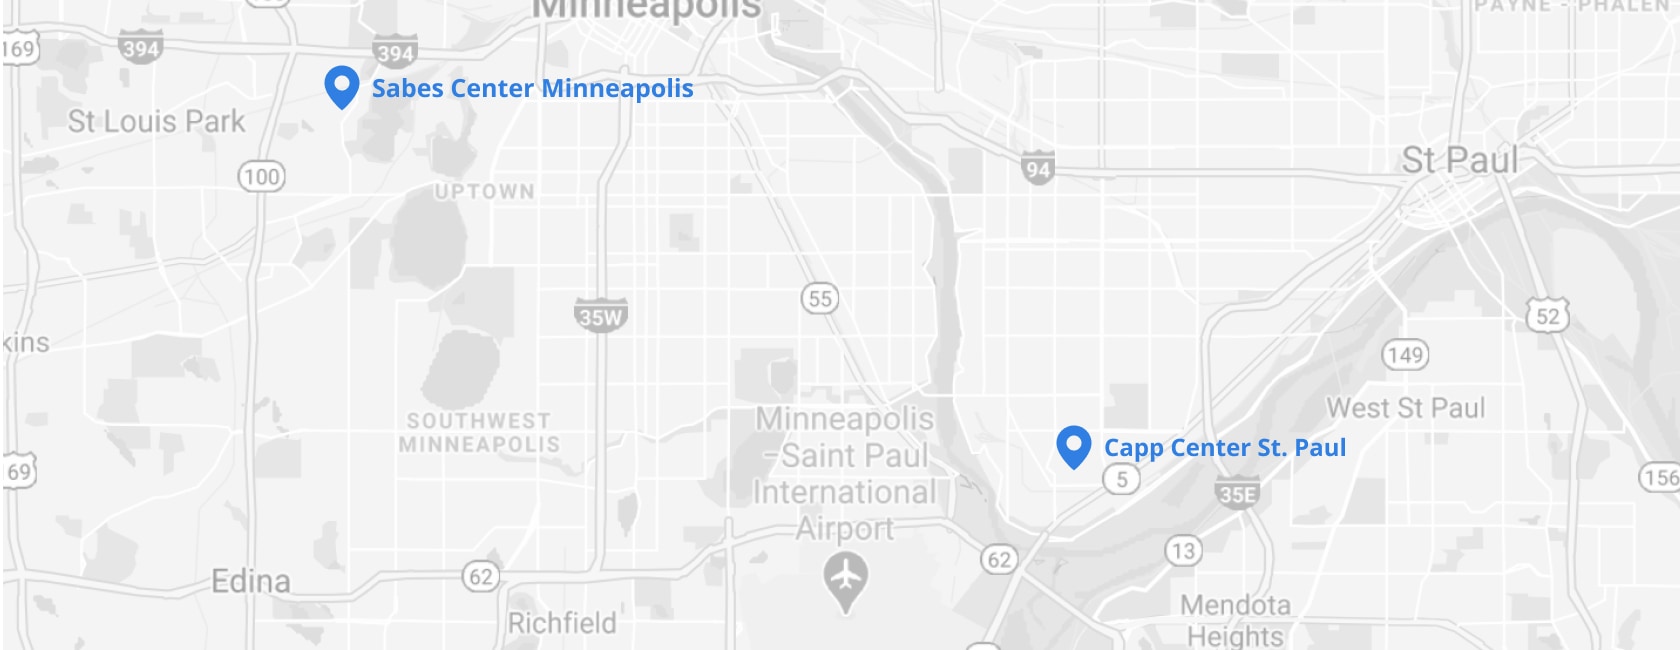 map image of Minnesota JCC locations